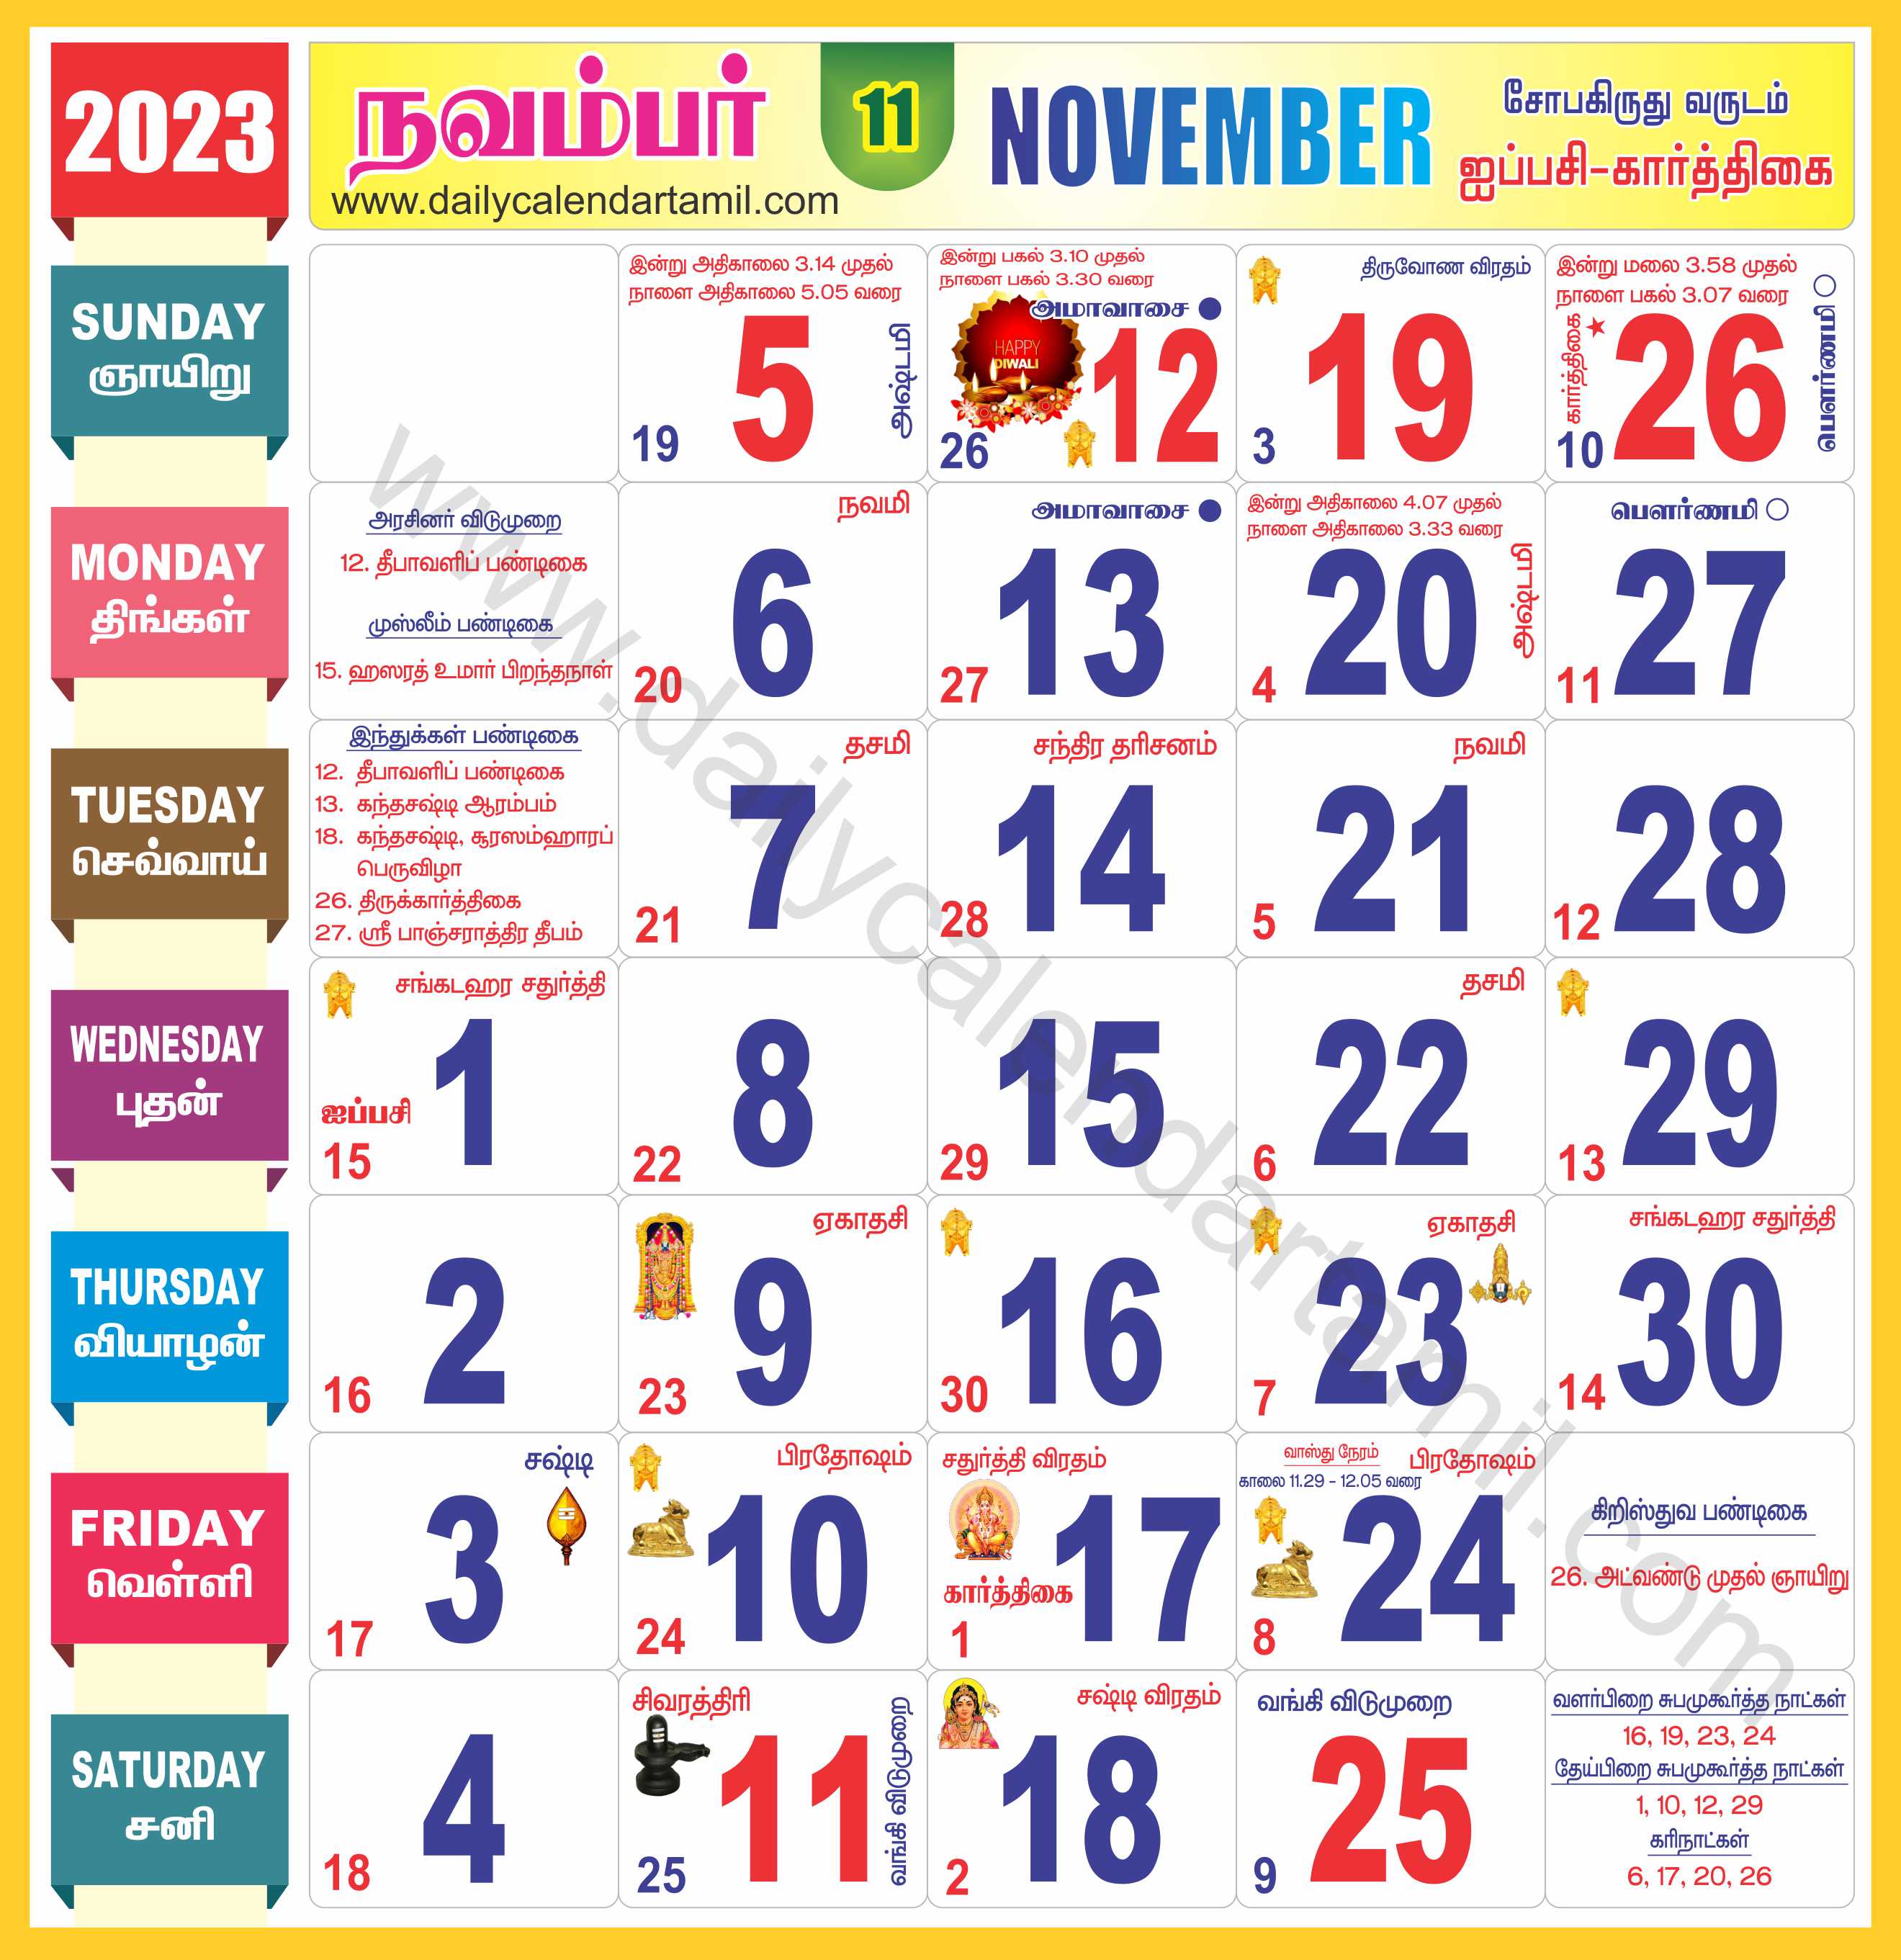 When Is Diwali In 2023 In Tamil Nadu Date Time Daily Calendar Tamil